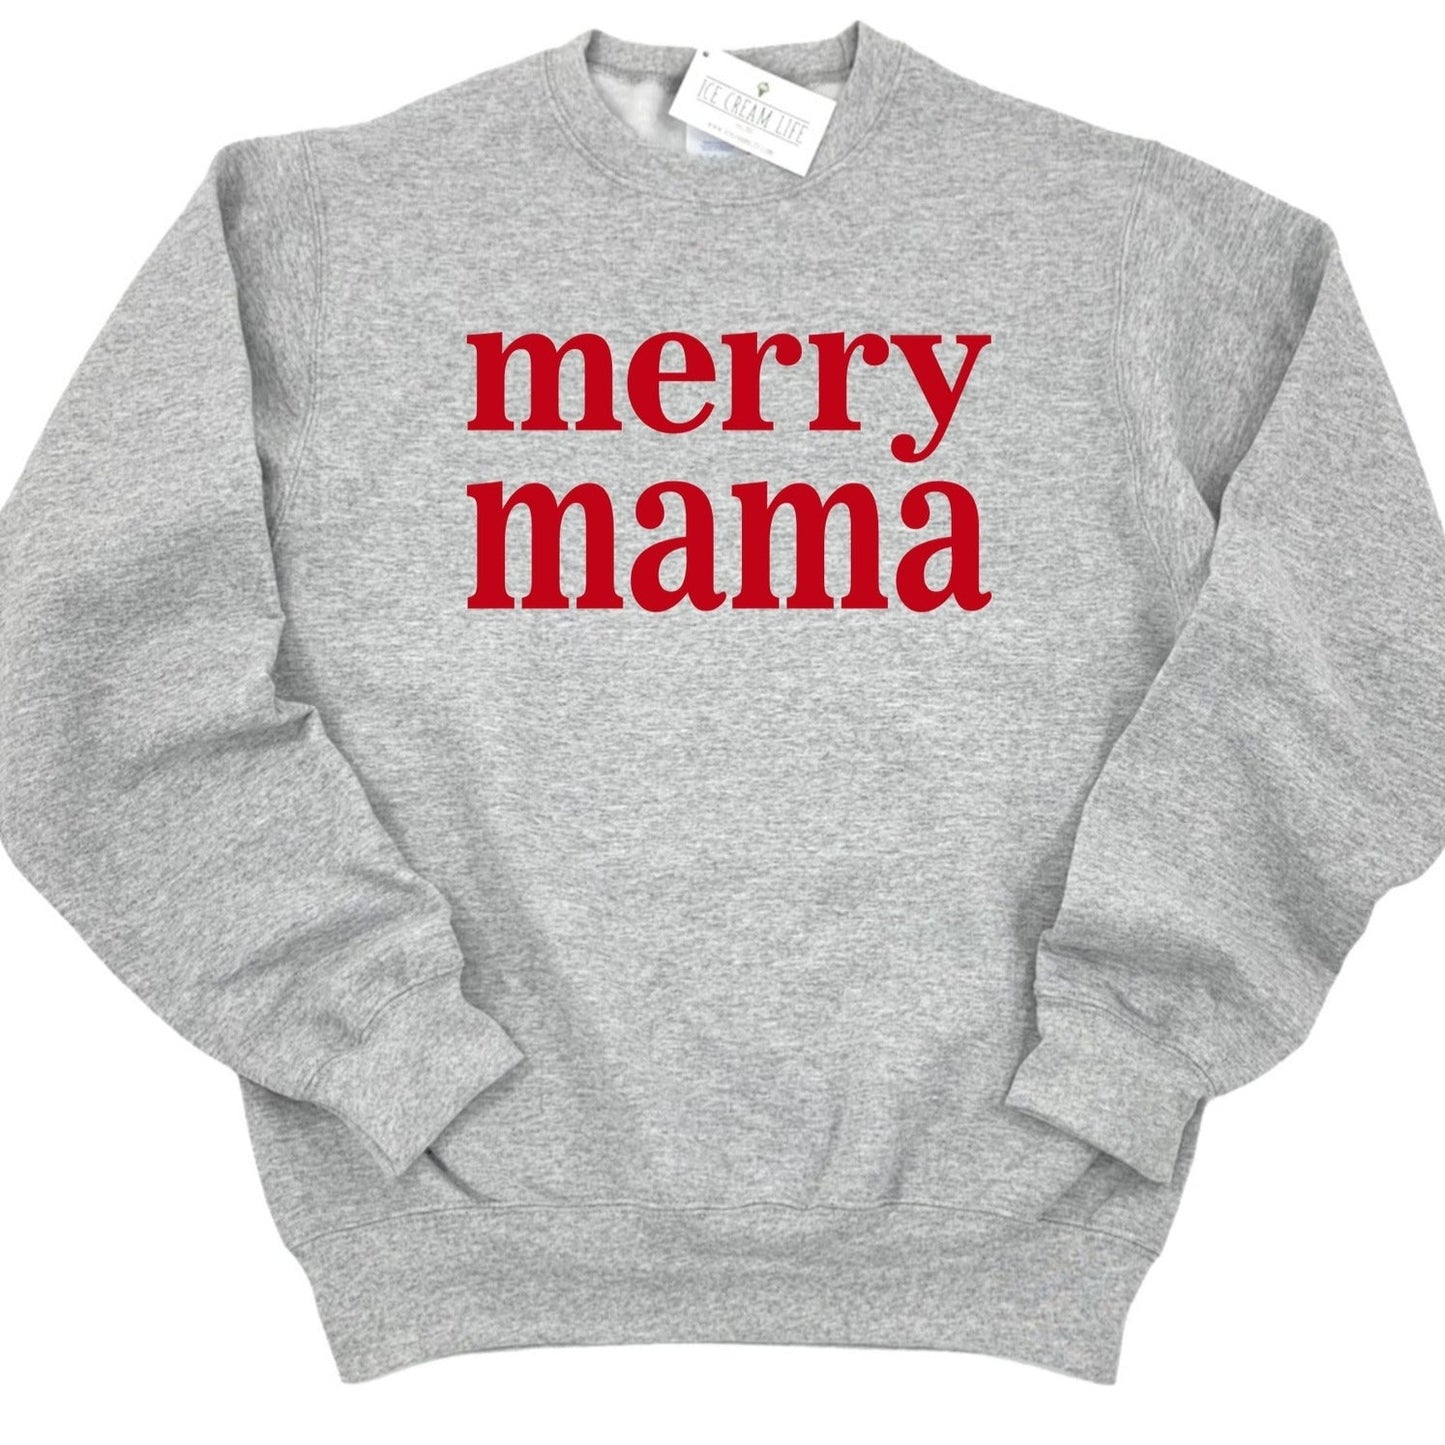 Merry Mama Women's Sweatshirt, Heather Grey